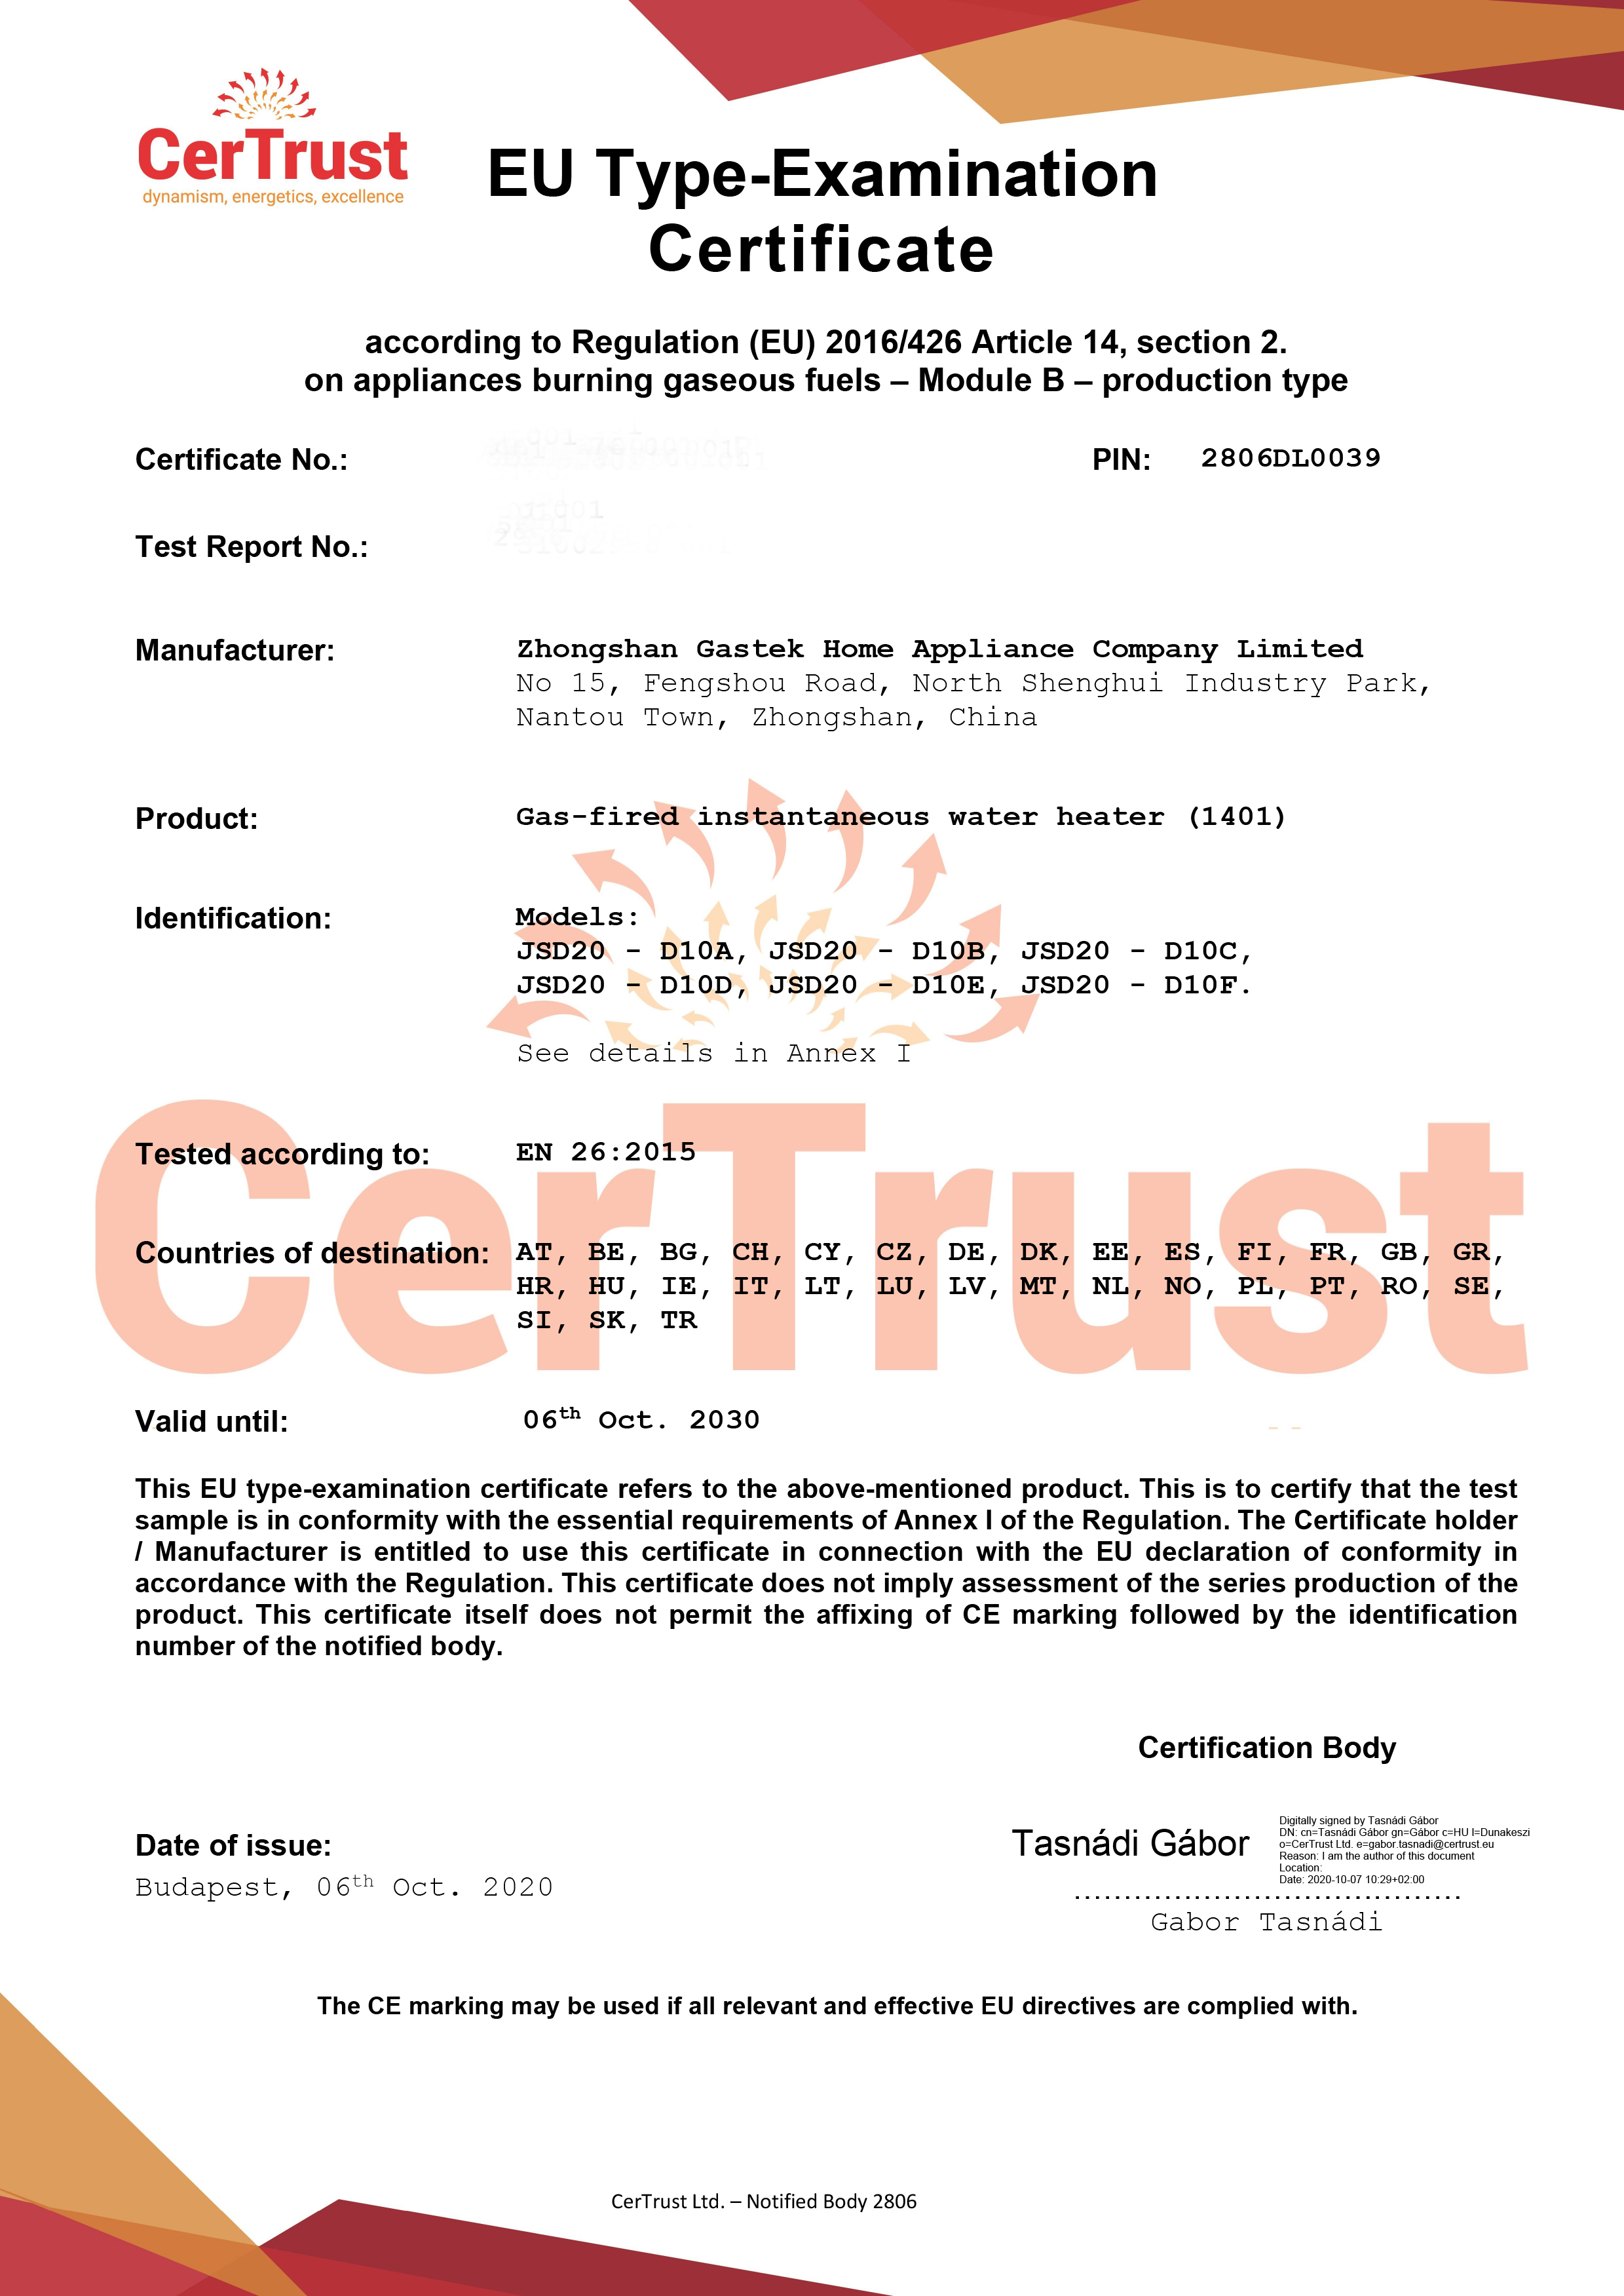 Gastek သည် ဤအောက်တိုဘာလတွင် ဂက်စ်ရေပူပေးစက်၏ CE လက်မှတ်ရခဲ့သည်။